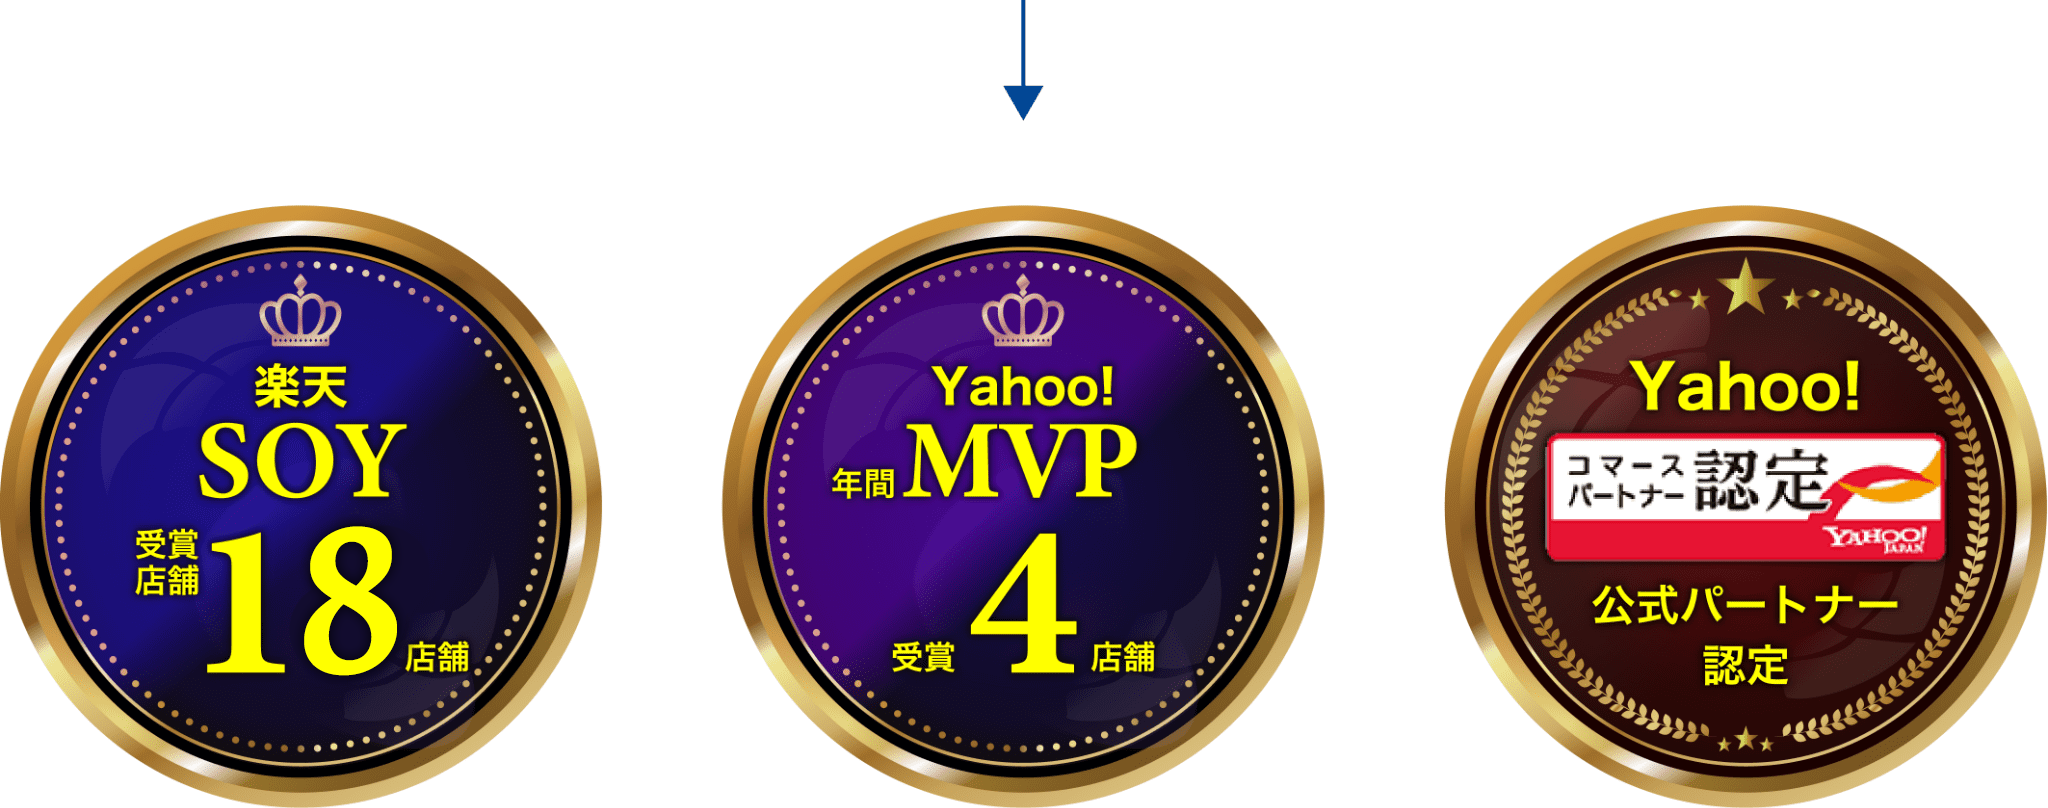 楽天SOY受賞店舗15店舗 Yahoo!年間MVP受賞4店舗 Yahoo!公式パートナー認定